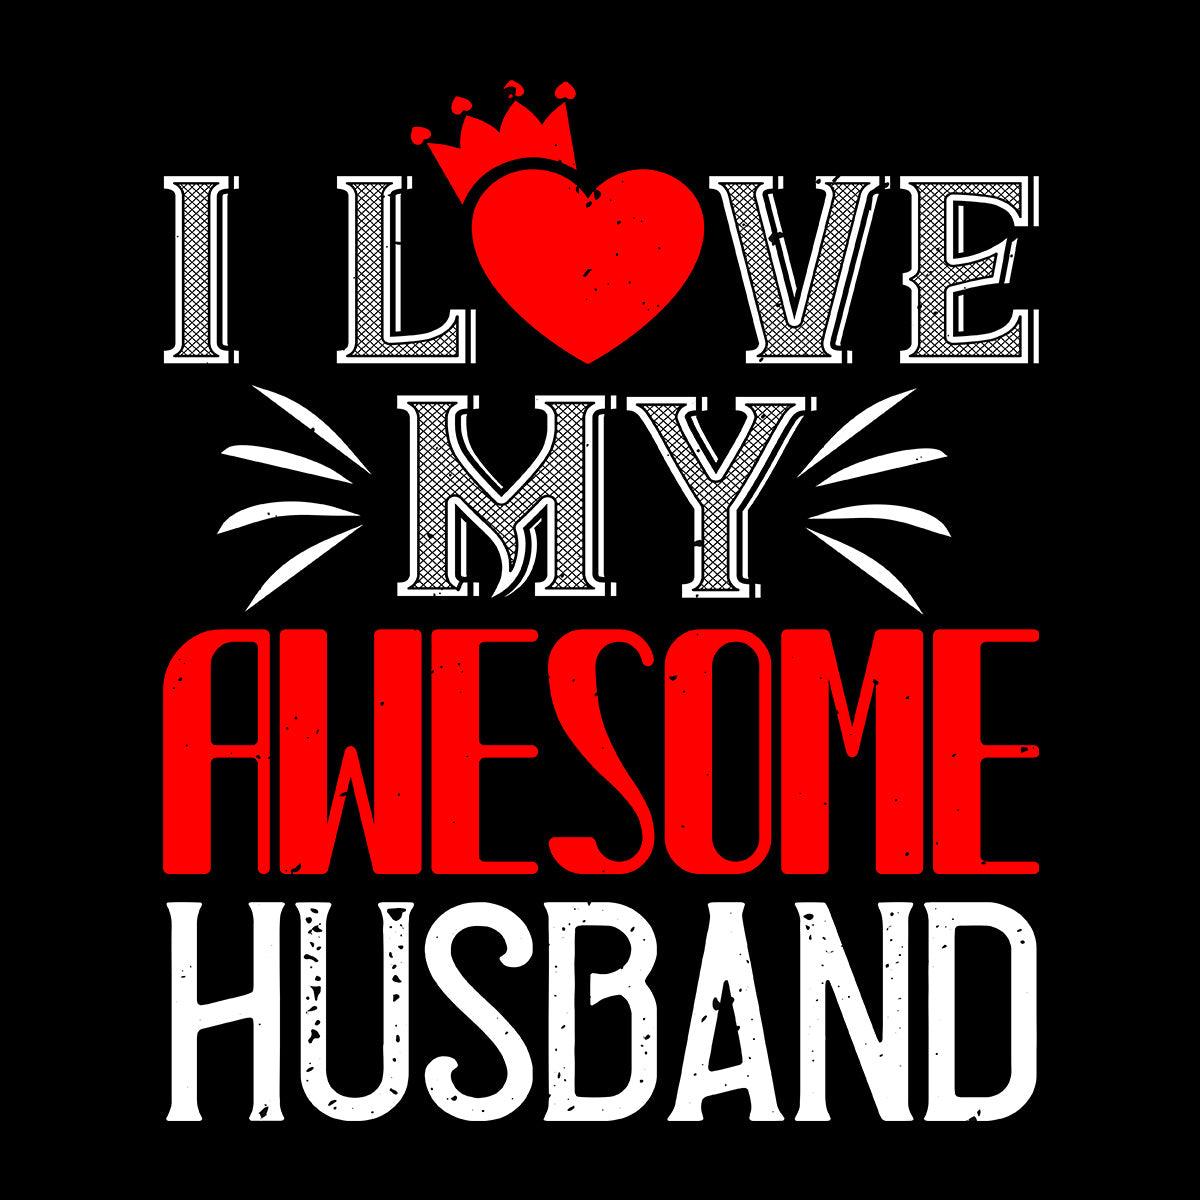 I love my awesome husband - valentine's day T-shirt edition - Kuzi Tees